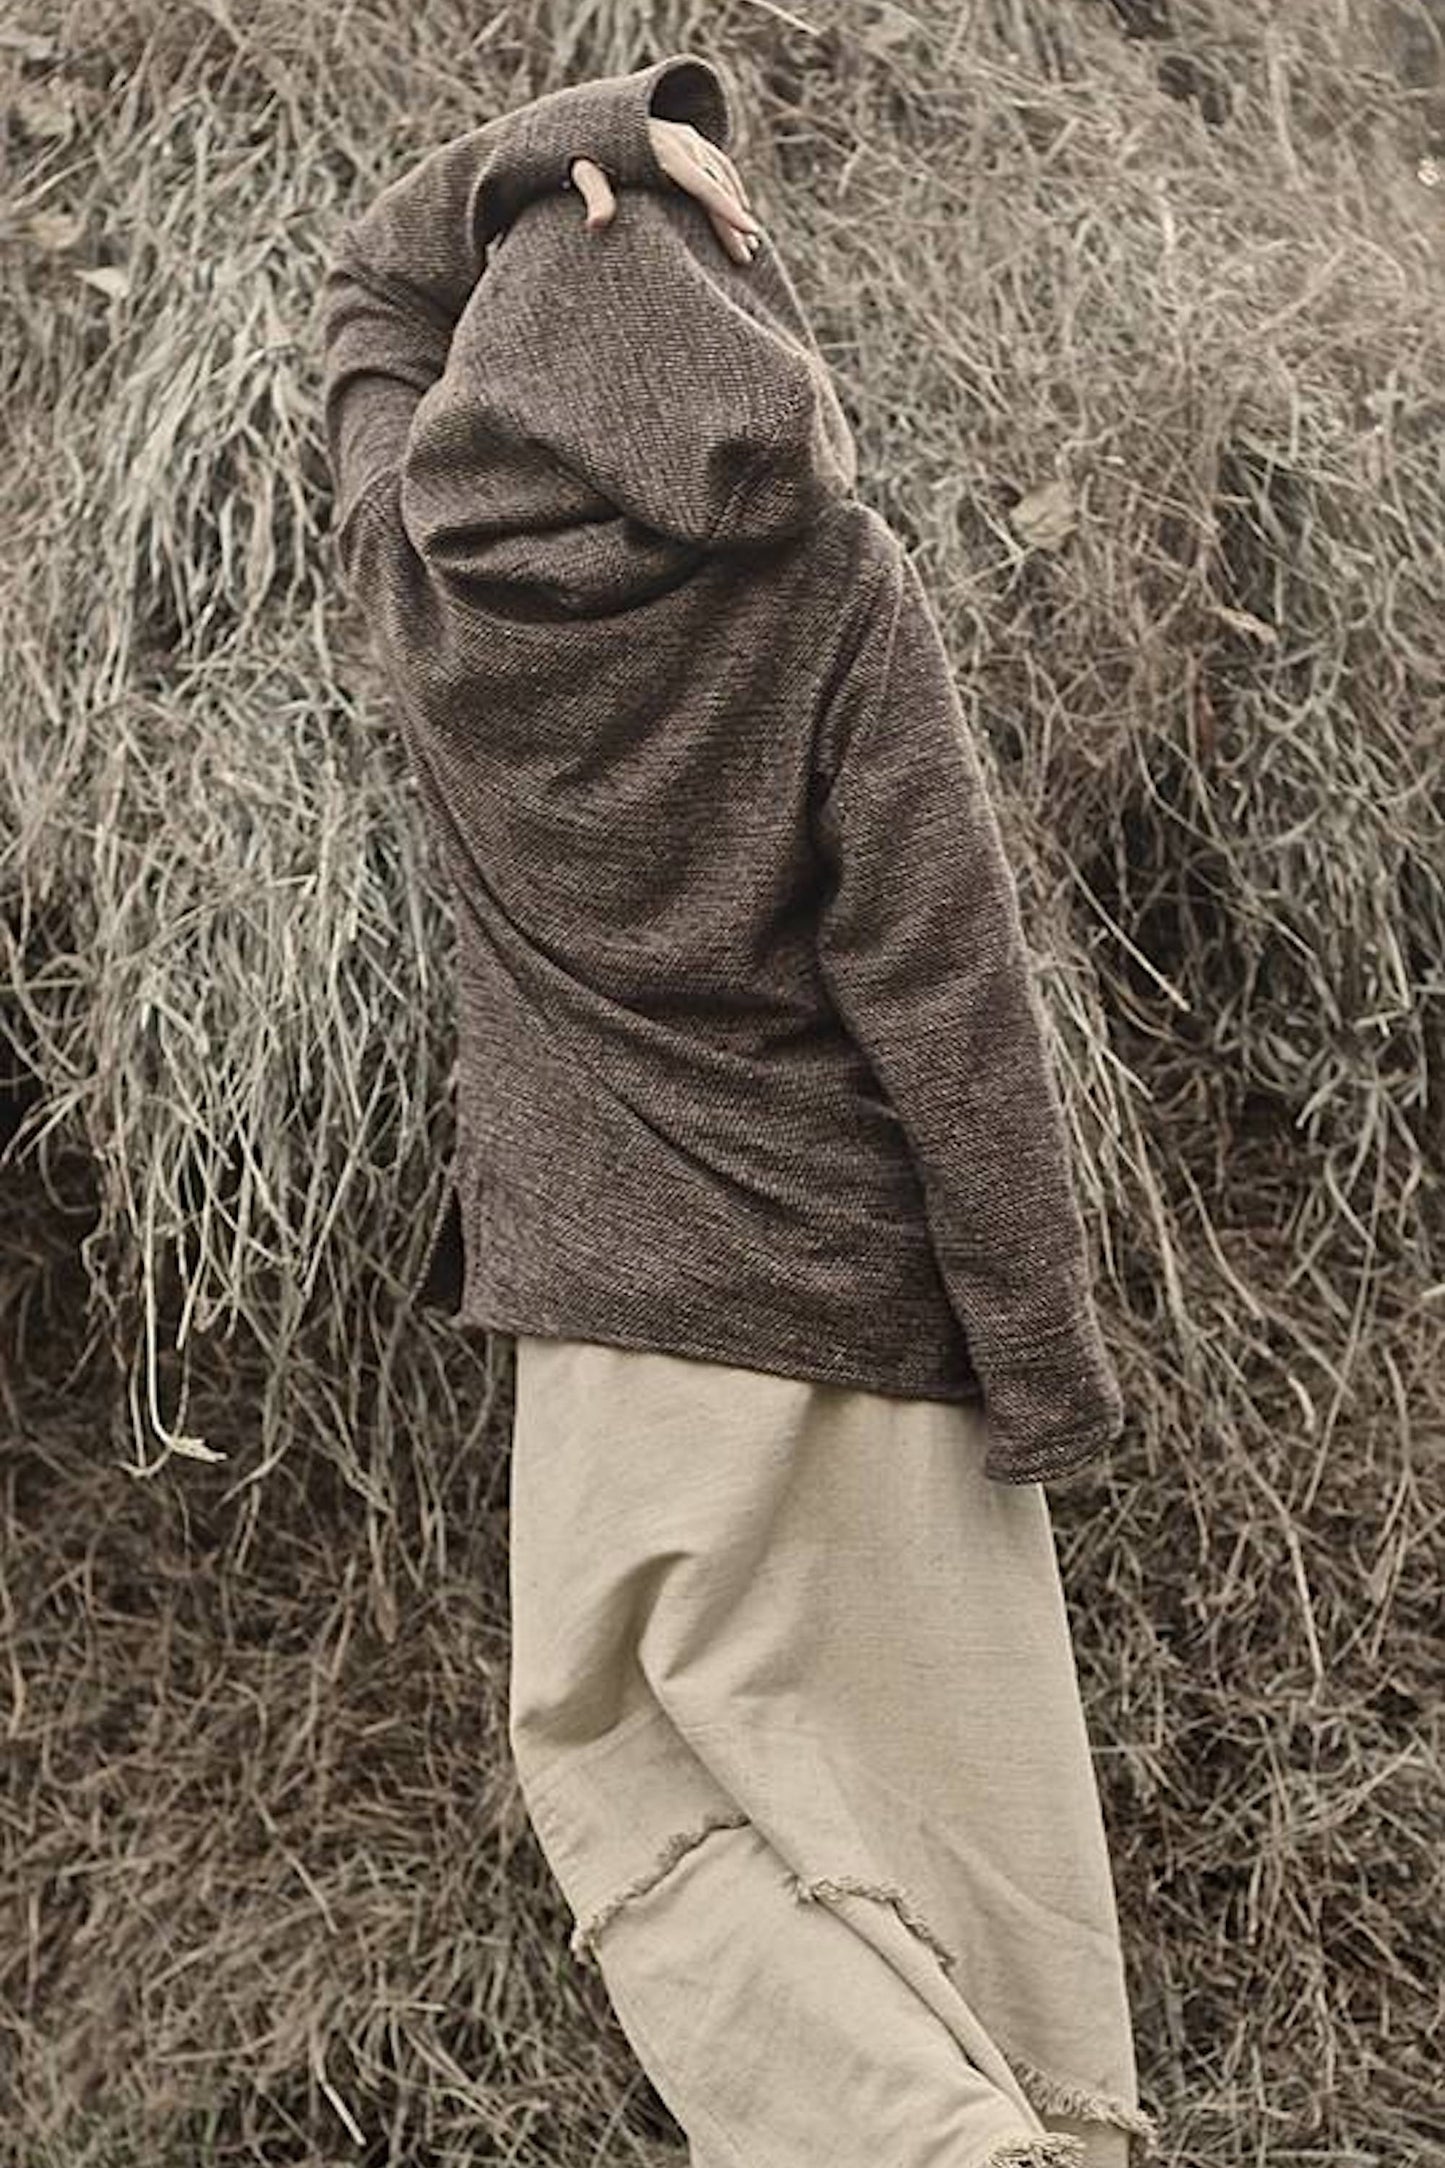 Nomad Women Pullover with Hoodie ⫸ Handwoven Hemp Wool